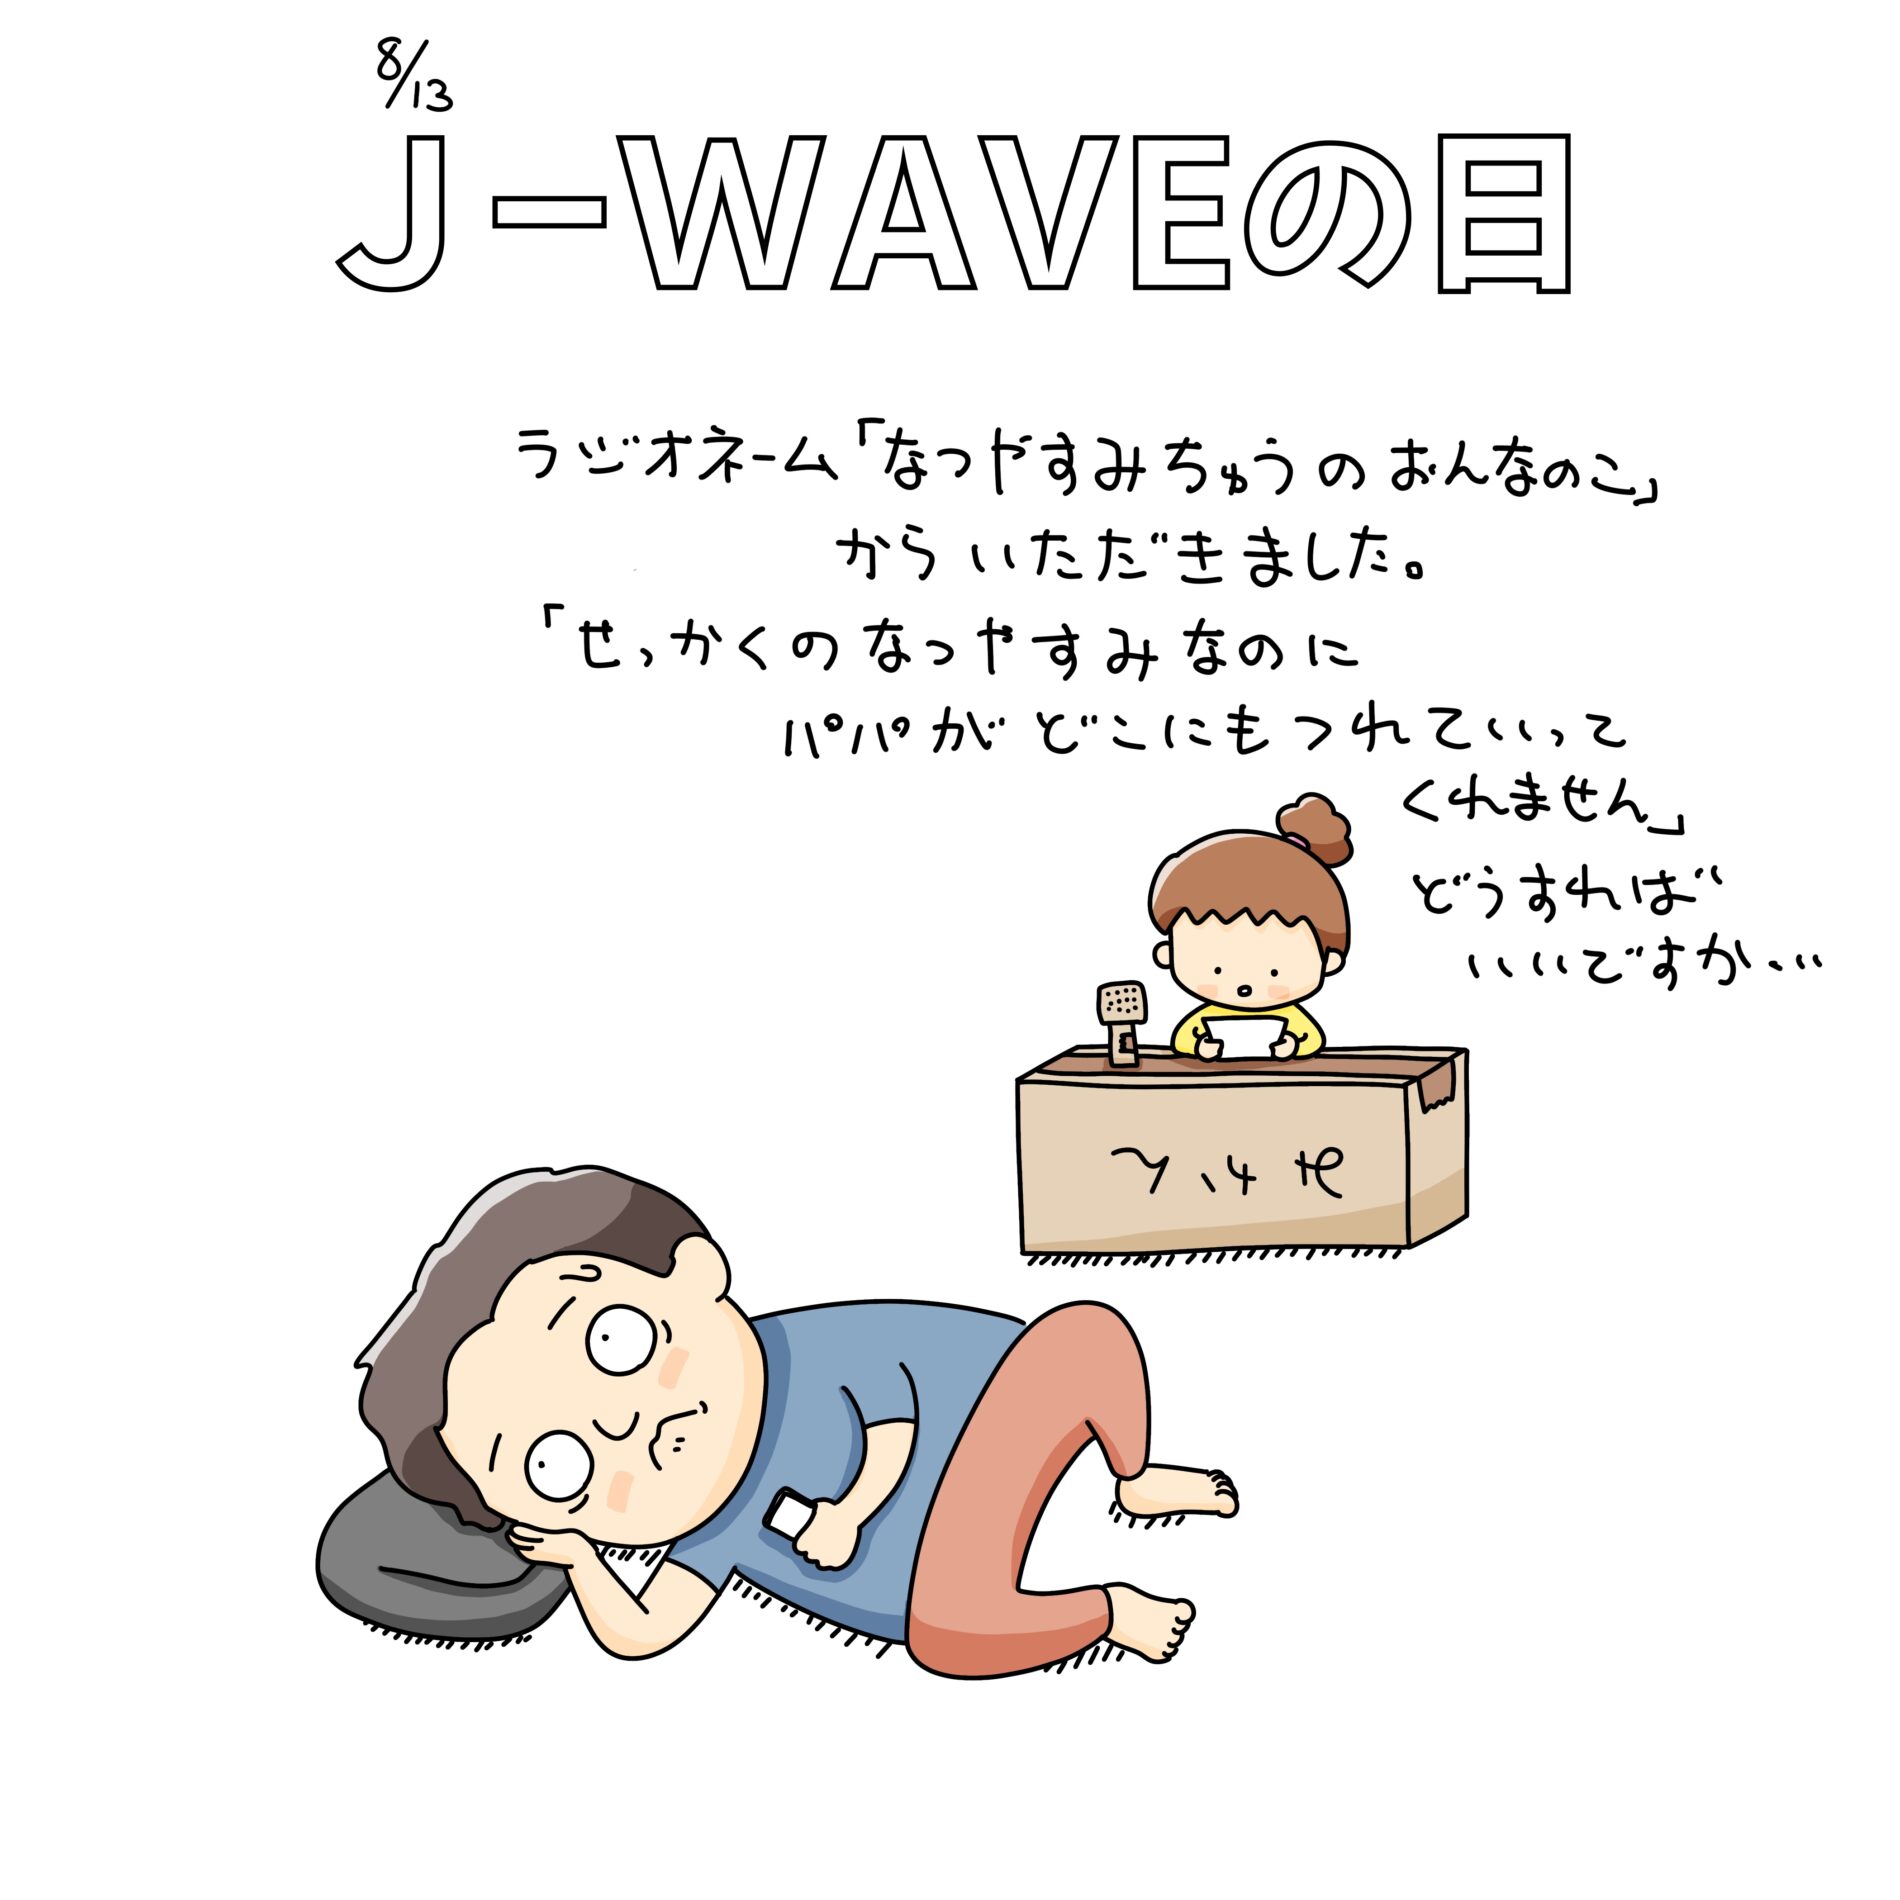 8/13：J-WAVEの日